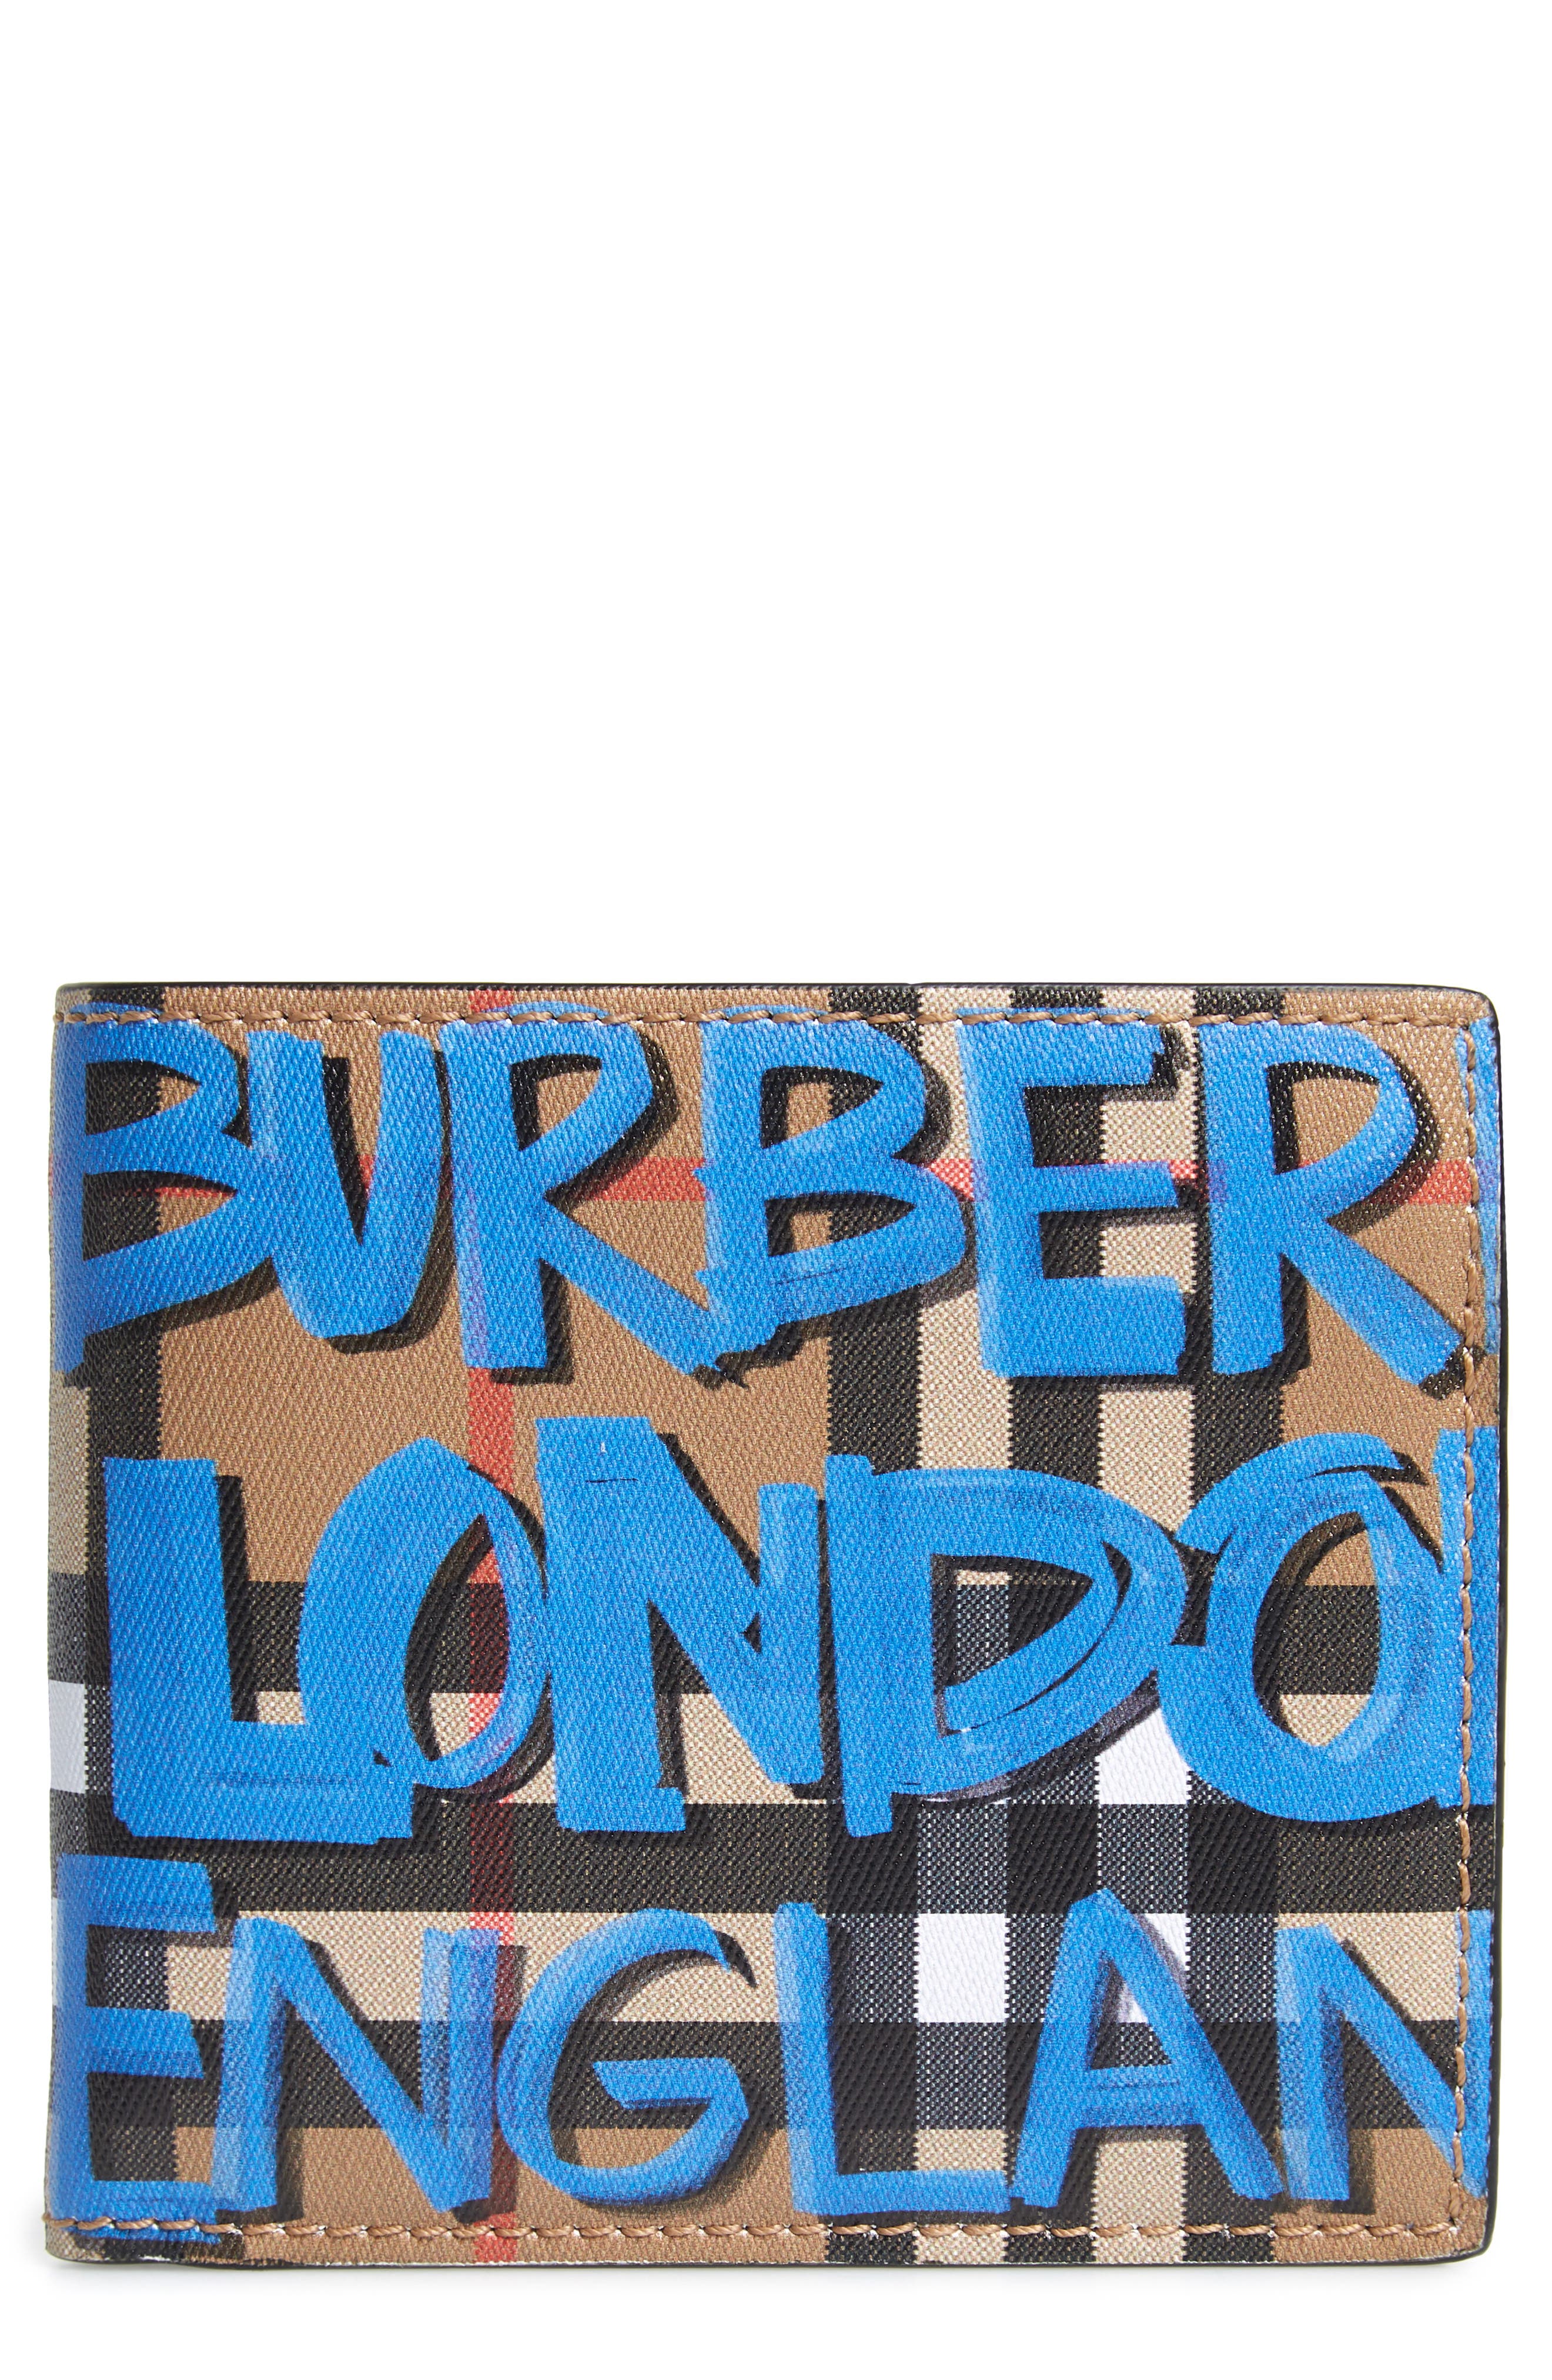 burberry graffiti card holder